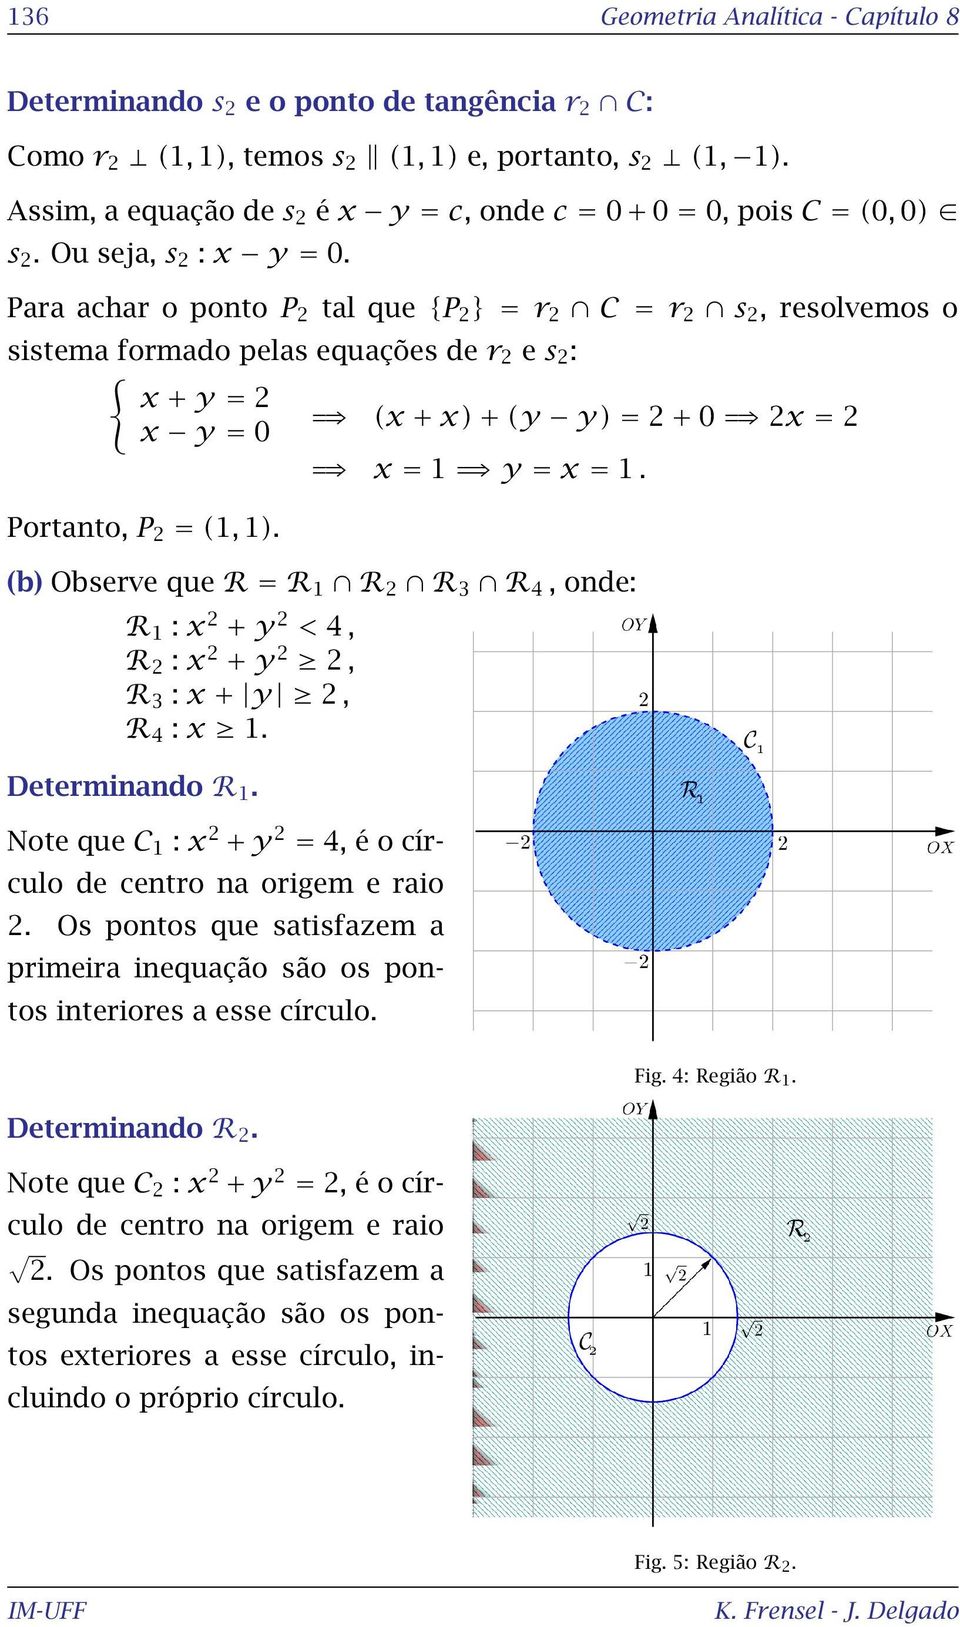 Para achar o ponto P tal que {P } = r C = r s, resolvemos o sistema formado pelas equações de r e s : { x + y = (x + x) + (y y) = + 0 x = x y = 0 x = 1 y = x = 1. Portanto, P = (1, 1).